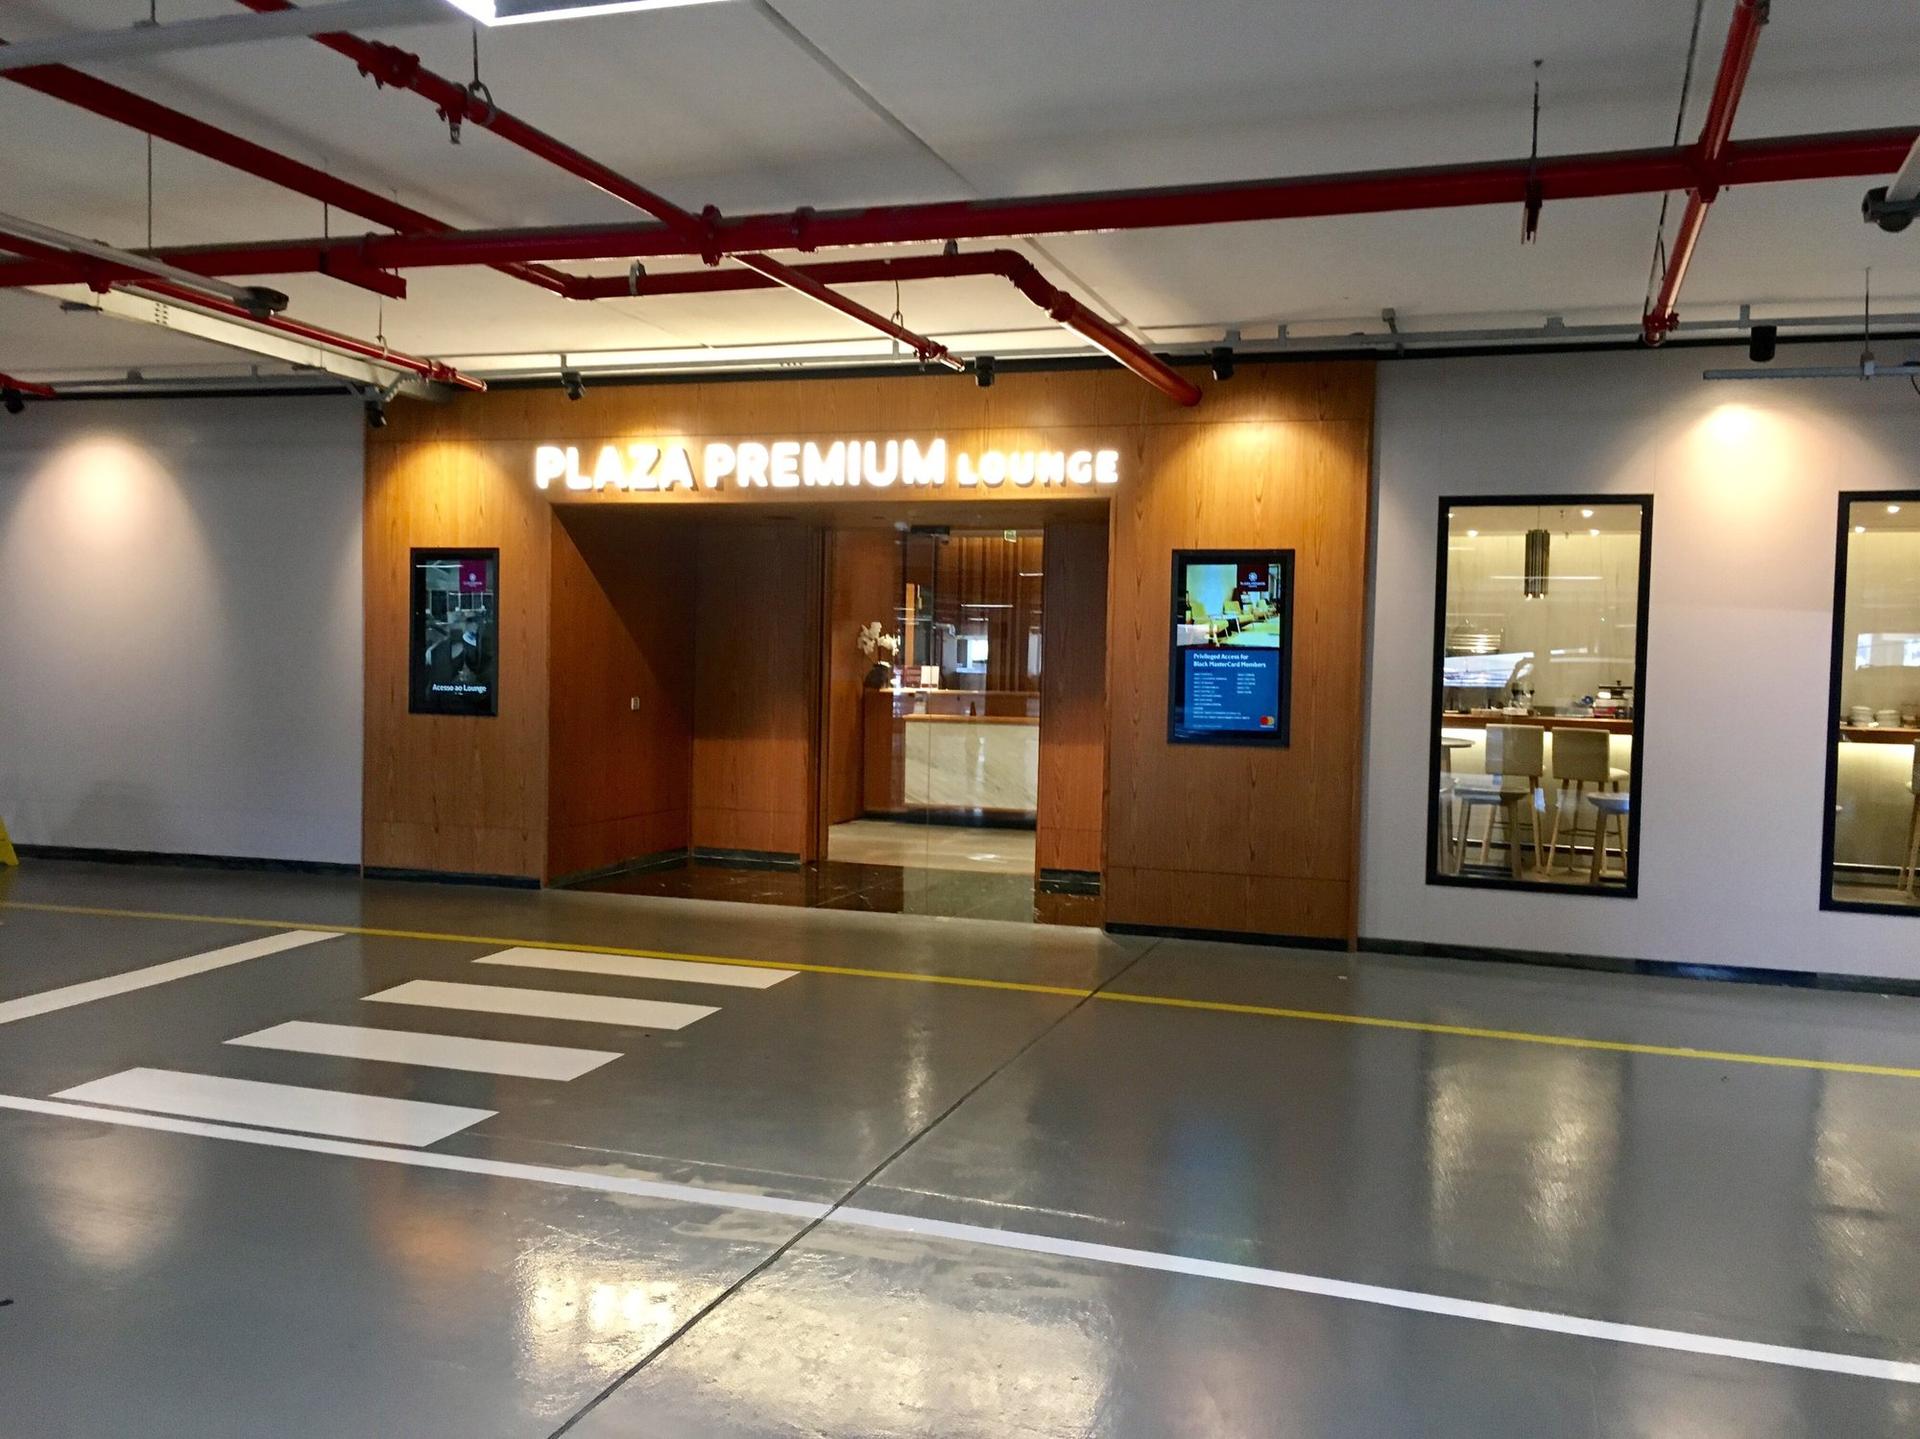 Plaza Premium Lounge (Arrivals) image 17 of 22